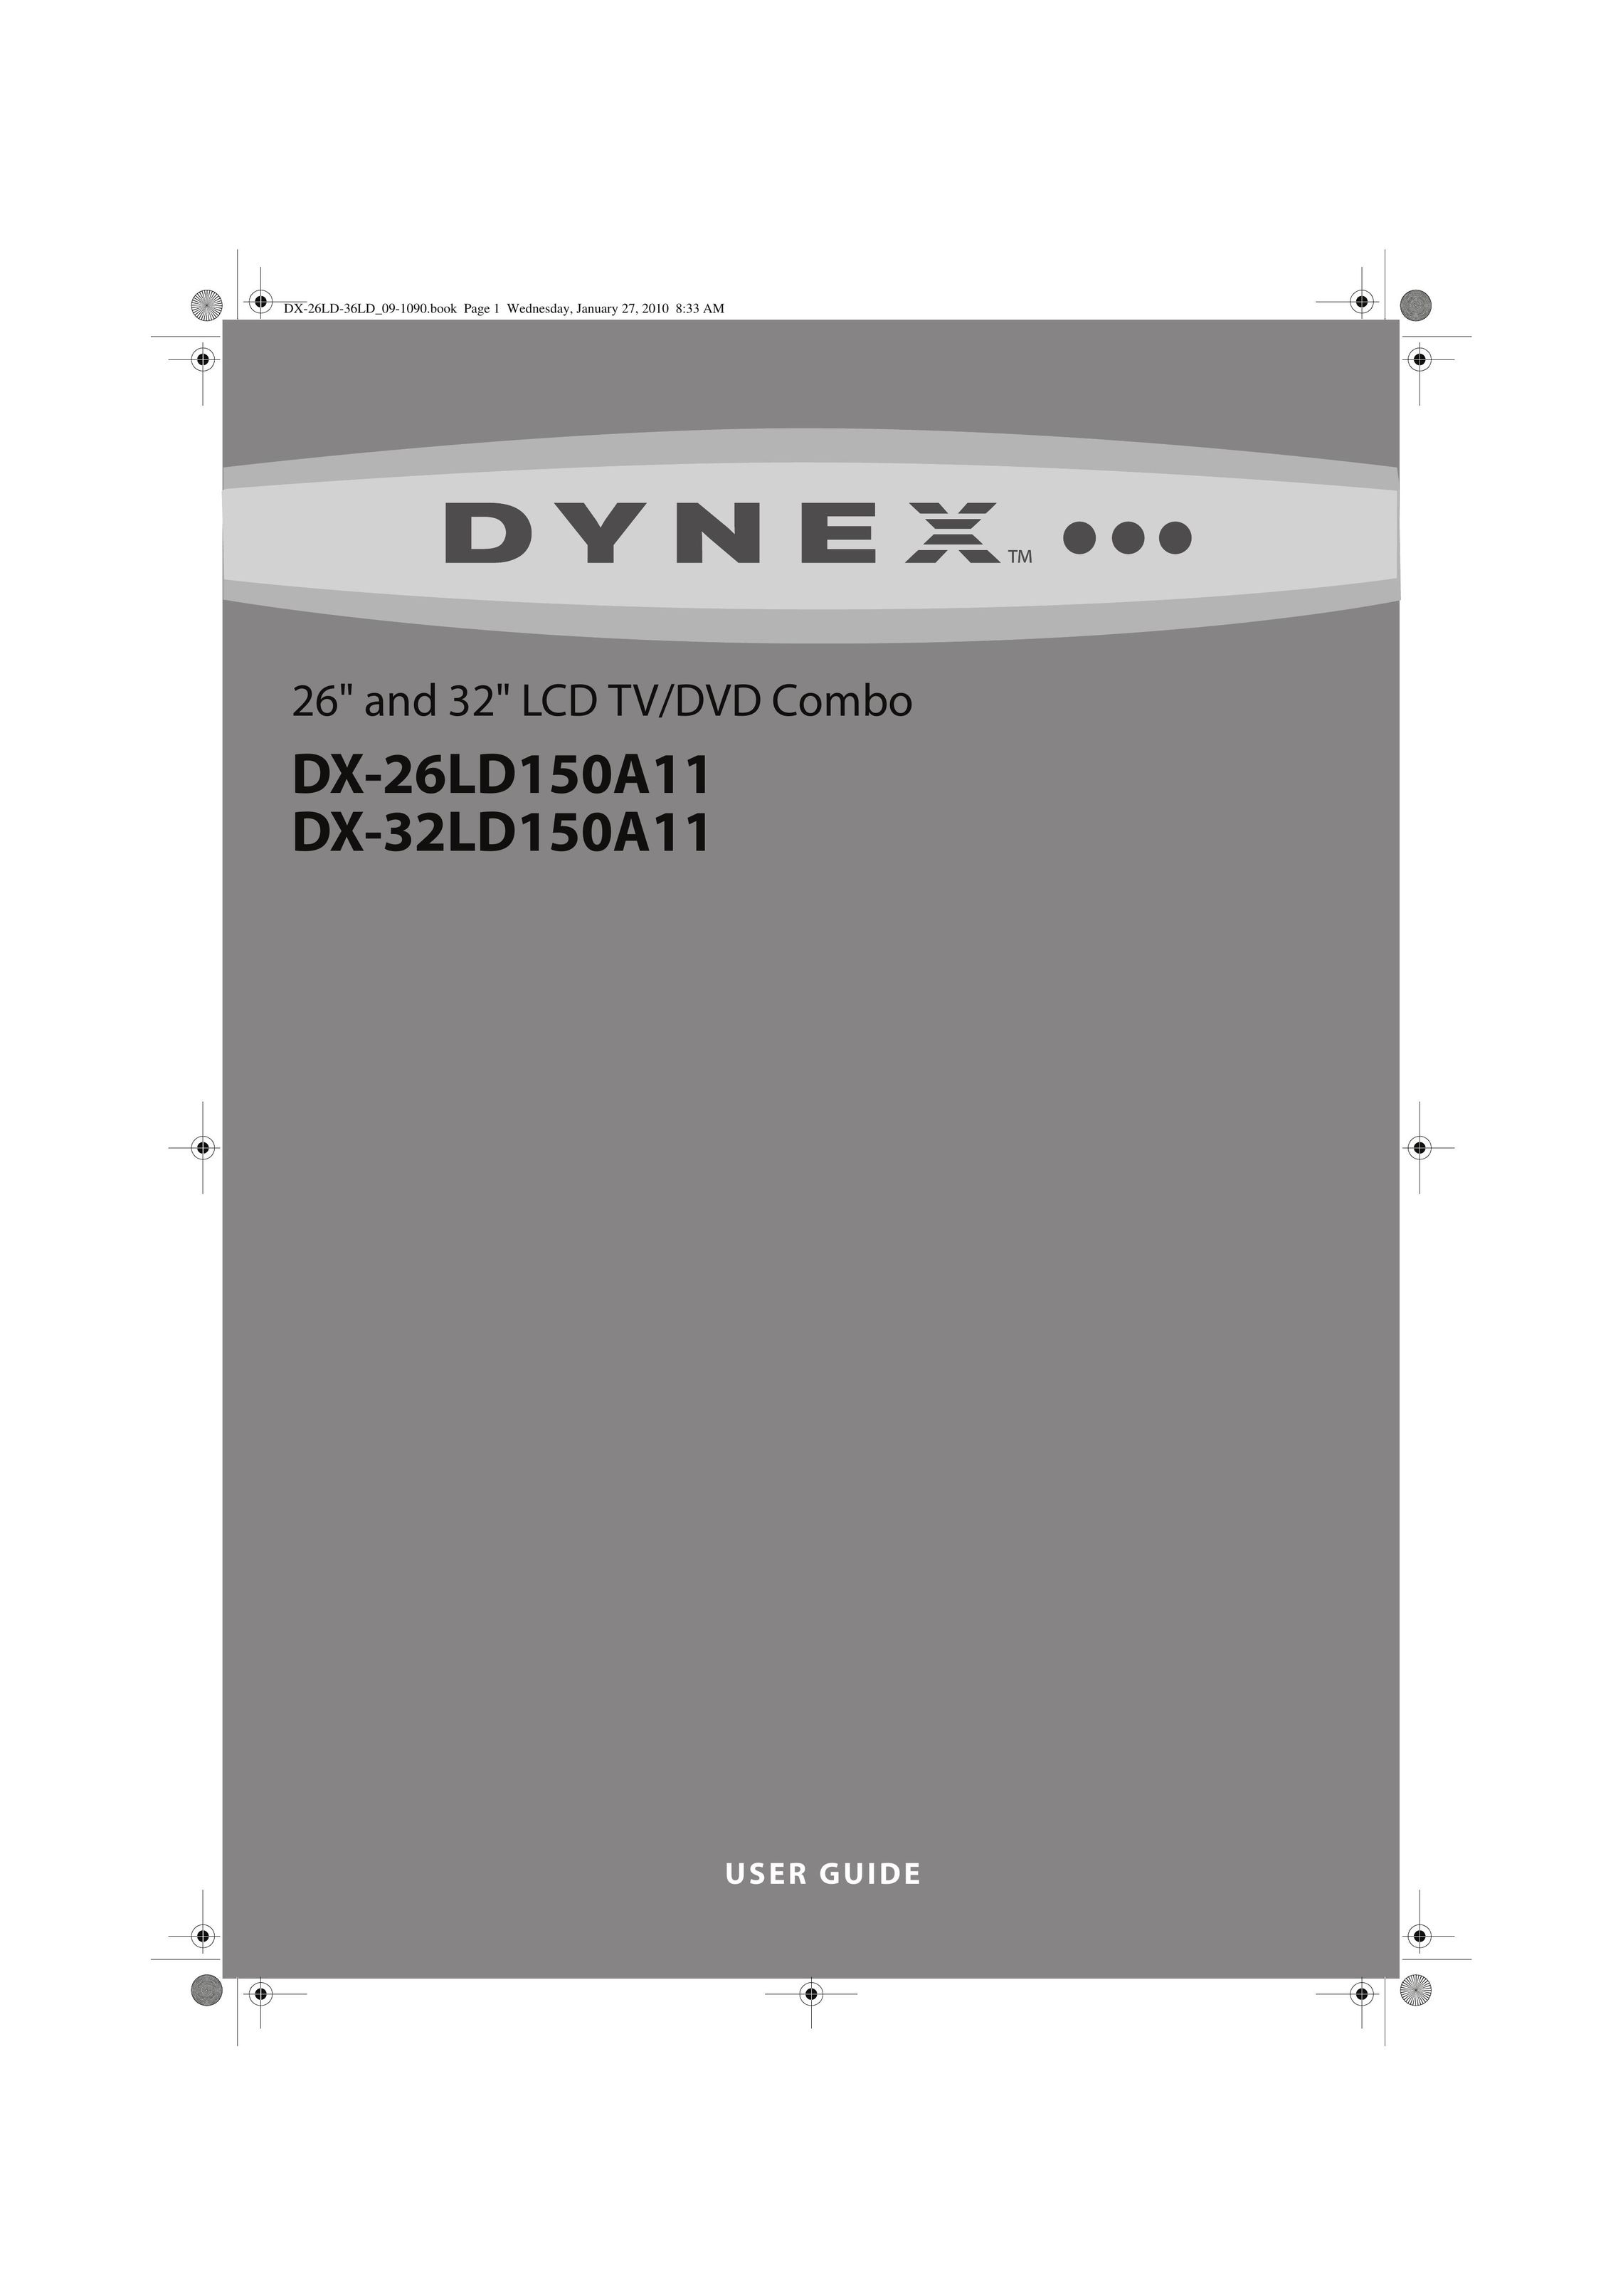 Dynex DX-26LD150A11 TV DVD Combo User Manual